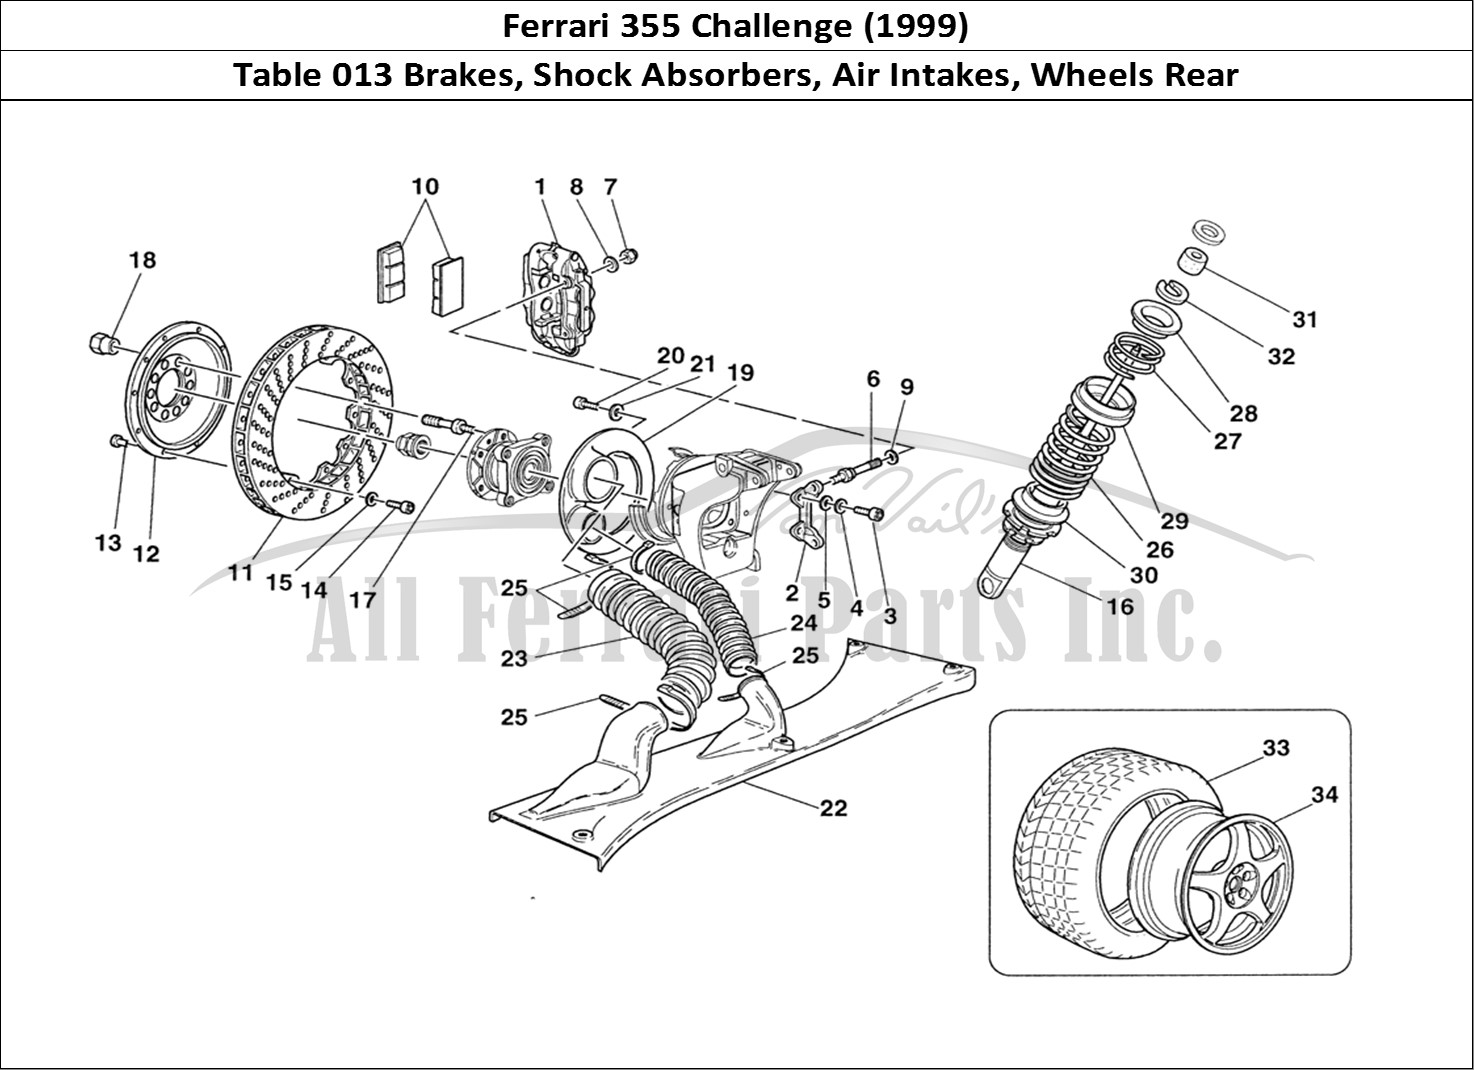 Ferrari Parts Ferrari 355 Challenge (1999) Page 013 Brakes - Shock-Absorbers